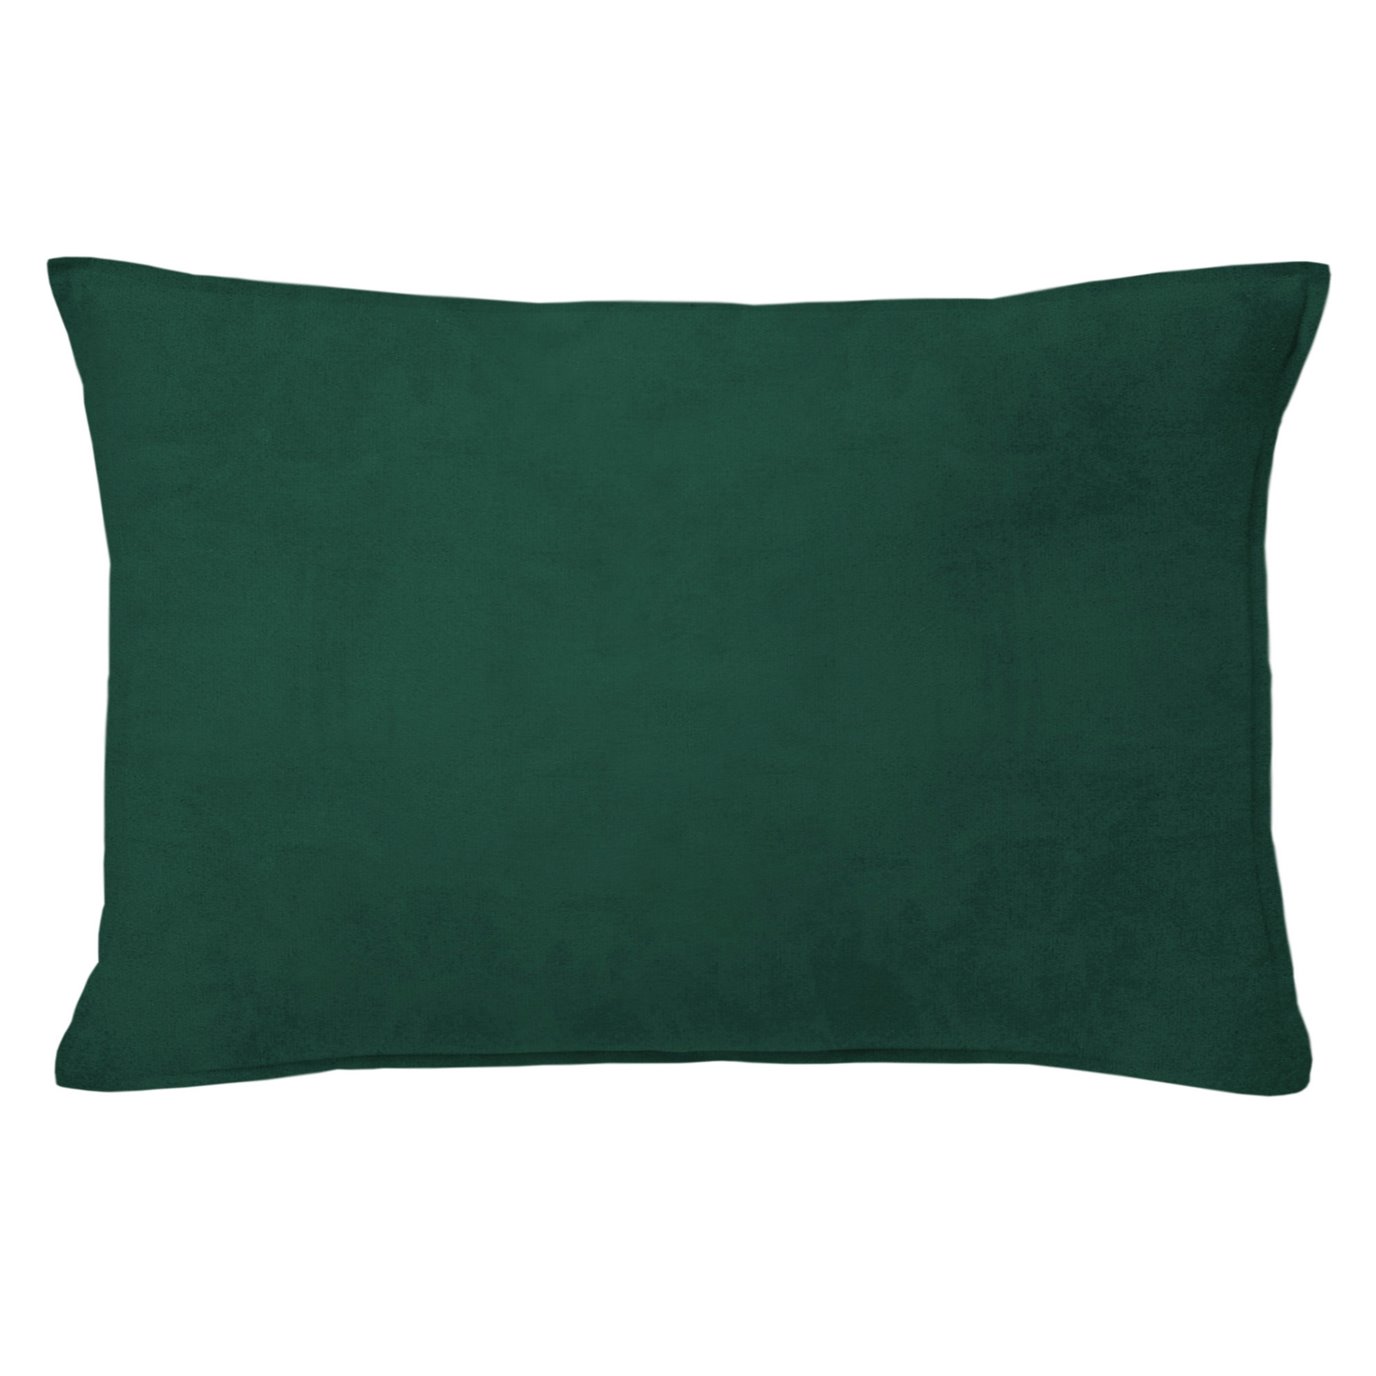 Vanessa Emerald Decorative Pillow - Size 14"x20" Rectangle